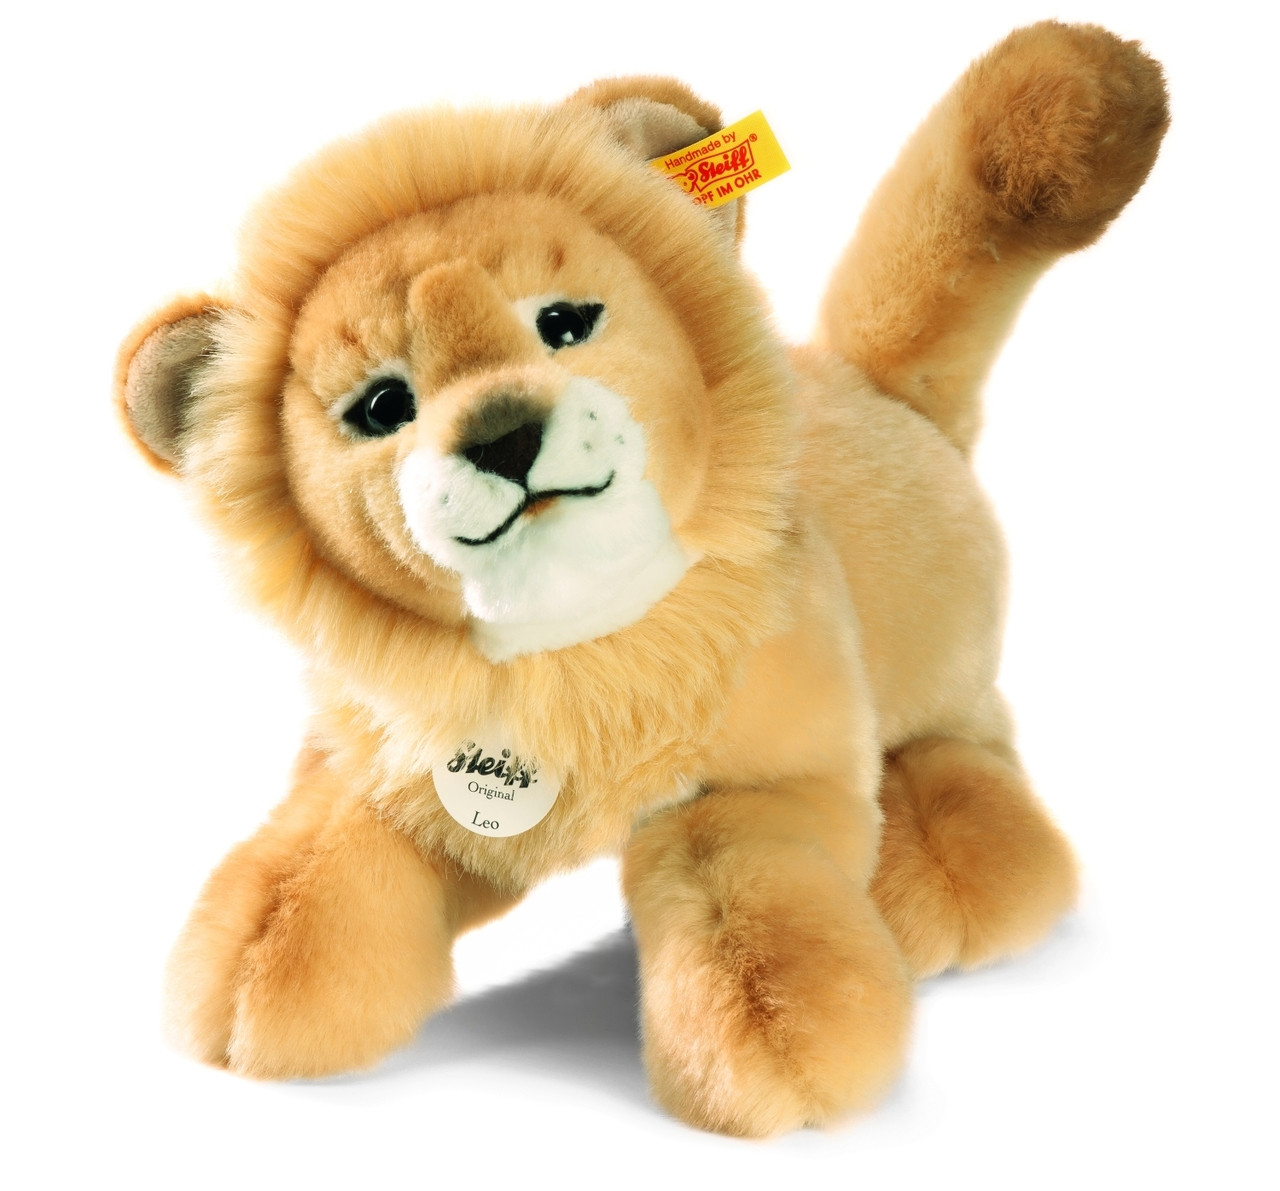 Blond Steiff 064135 Leo Lion Plush Animal Toy